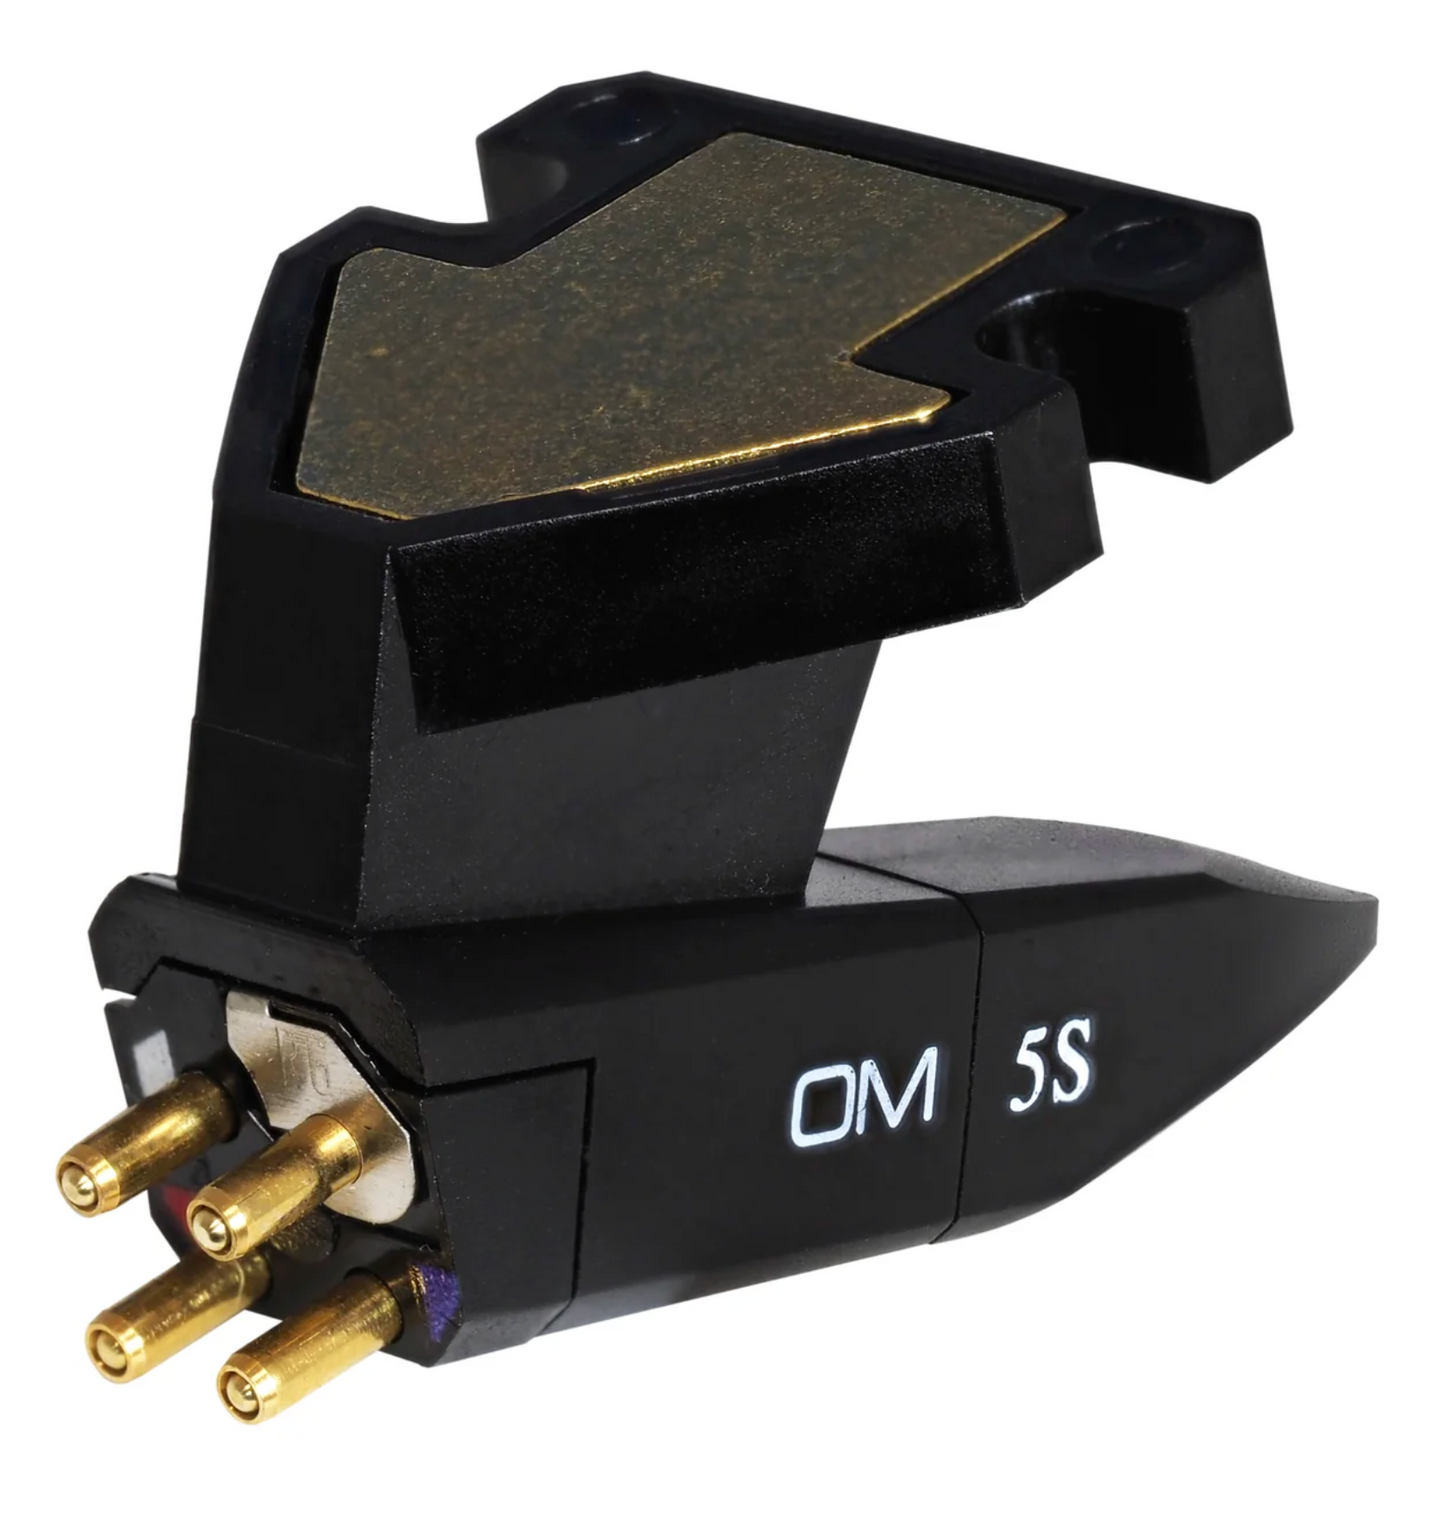 Ortofon Hi-Fi OM 5 S Moving Magnet Cartridge. Images showing pins